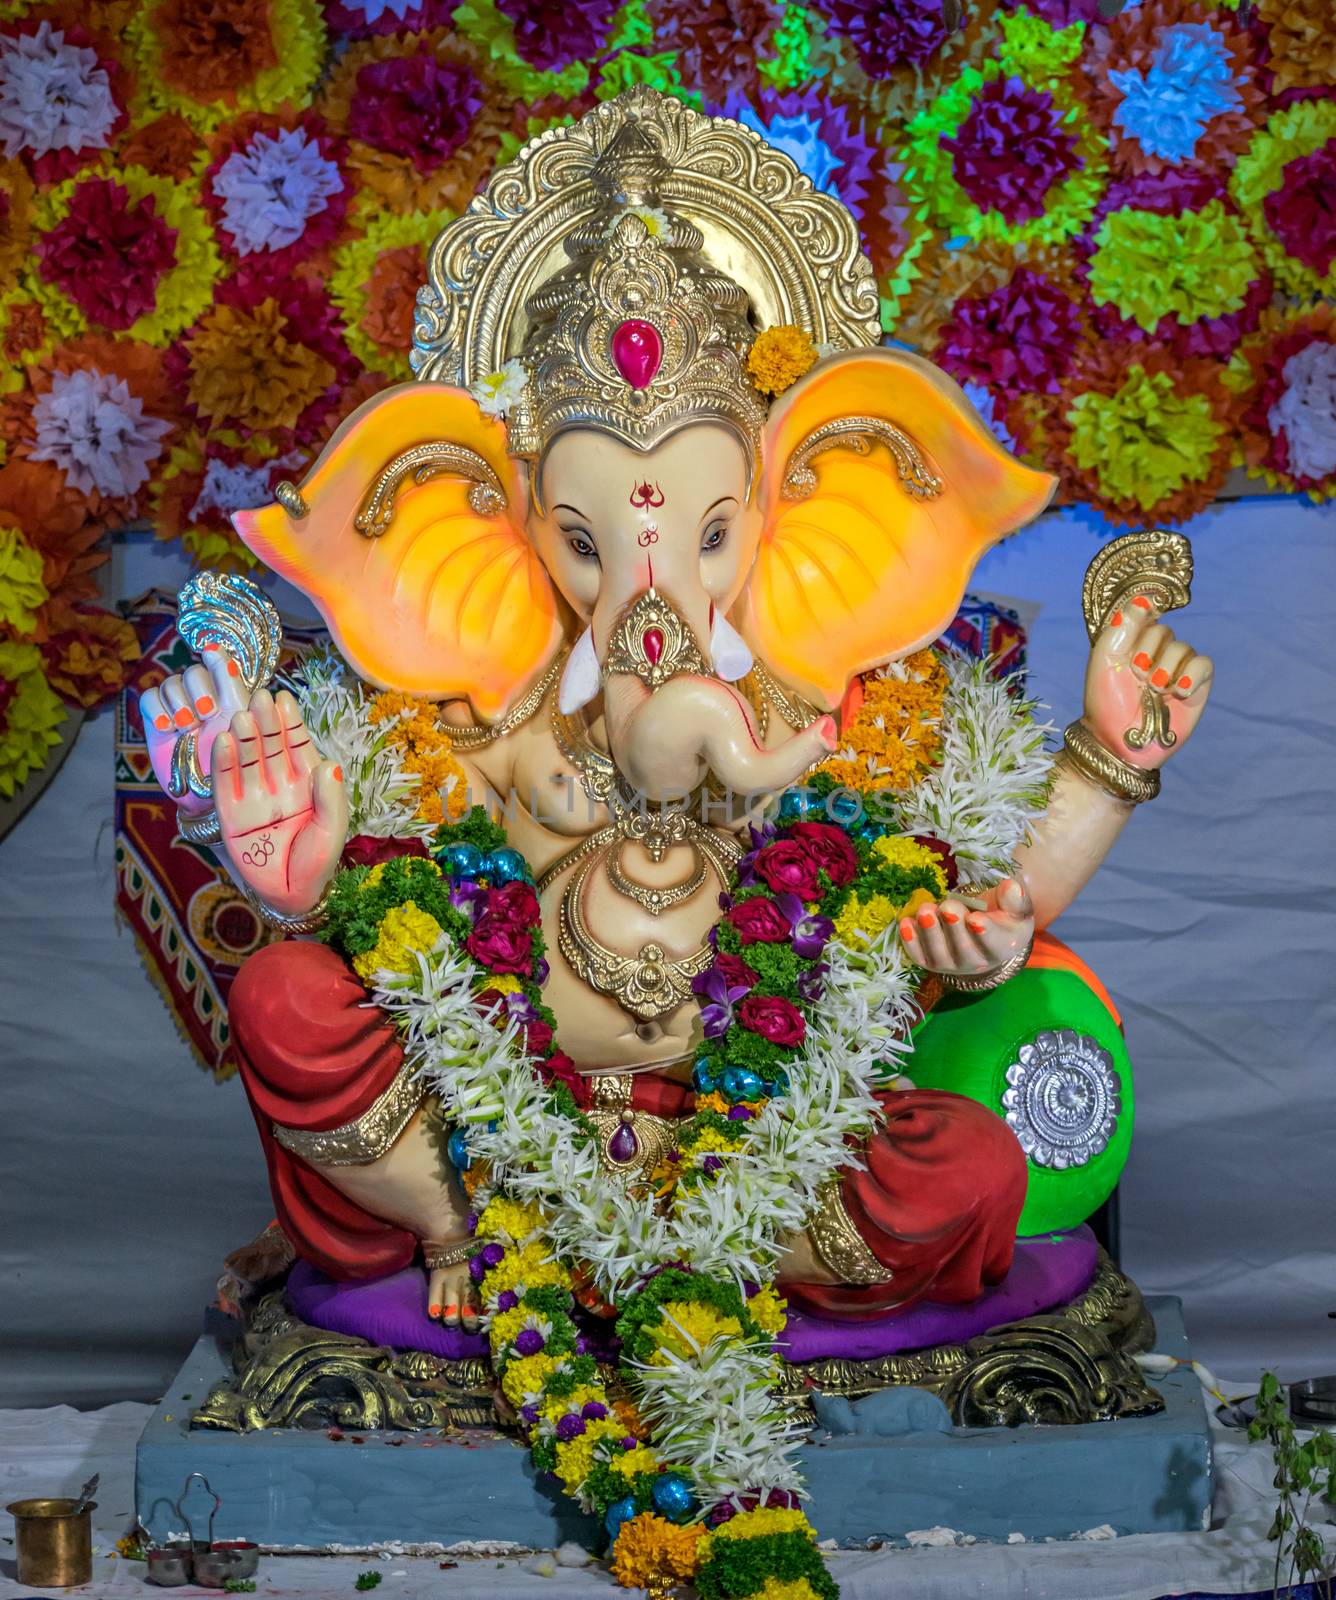 Portrait , closeup view of decorated and garlanded  idol of Hindu God Ganesha in Pune ,Maharashtra, India.